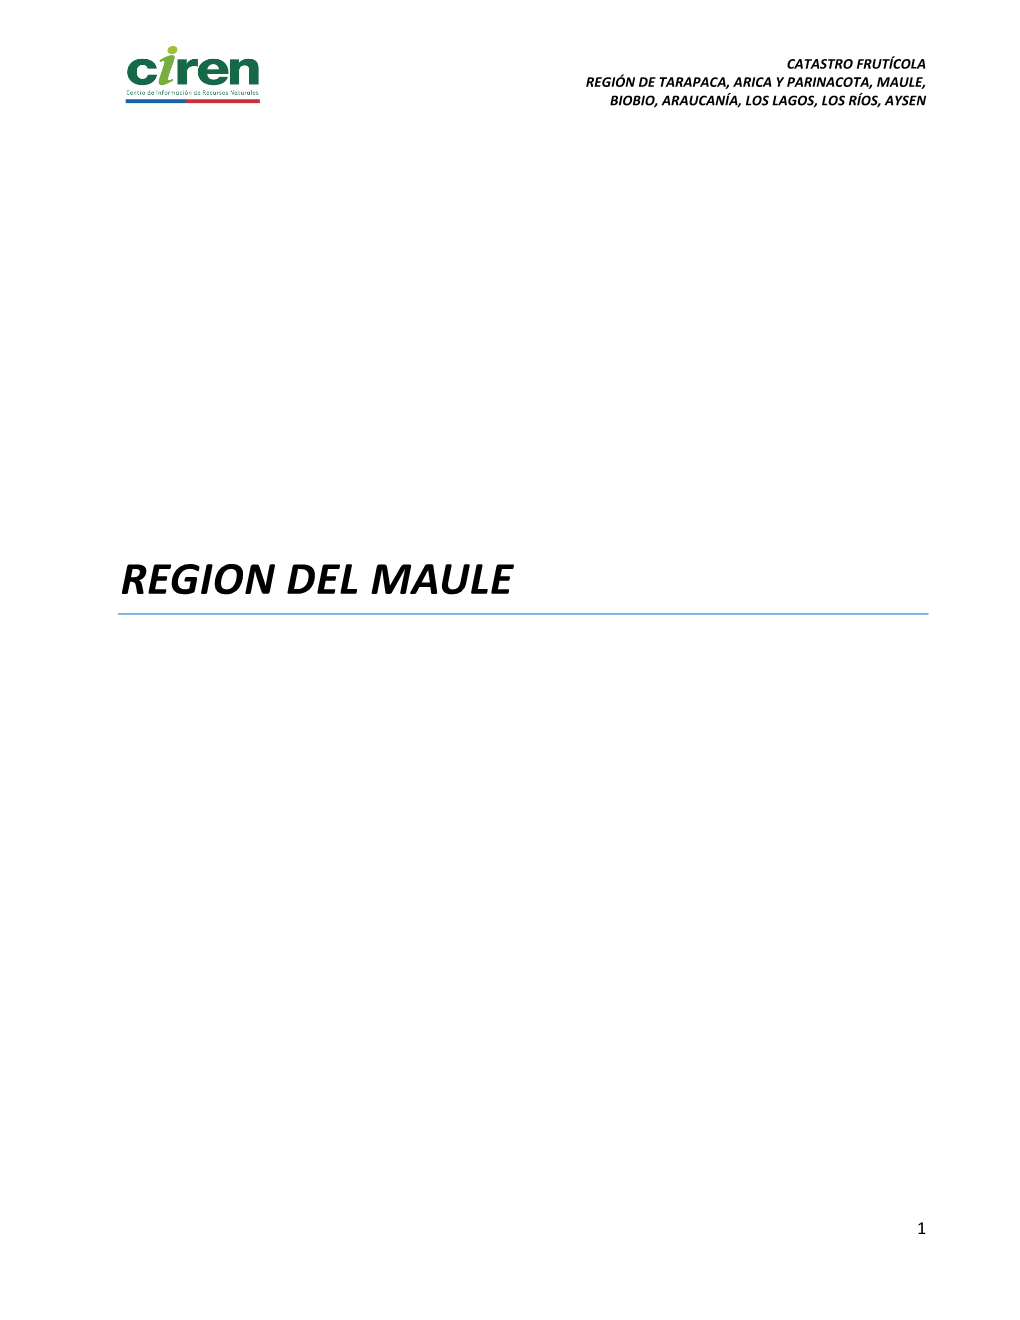 Region Del Maule